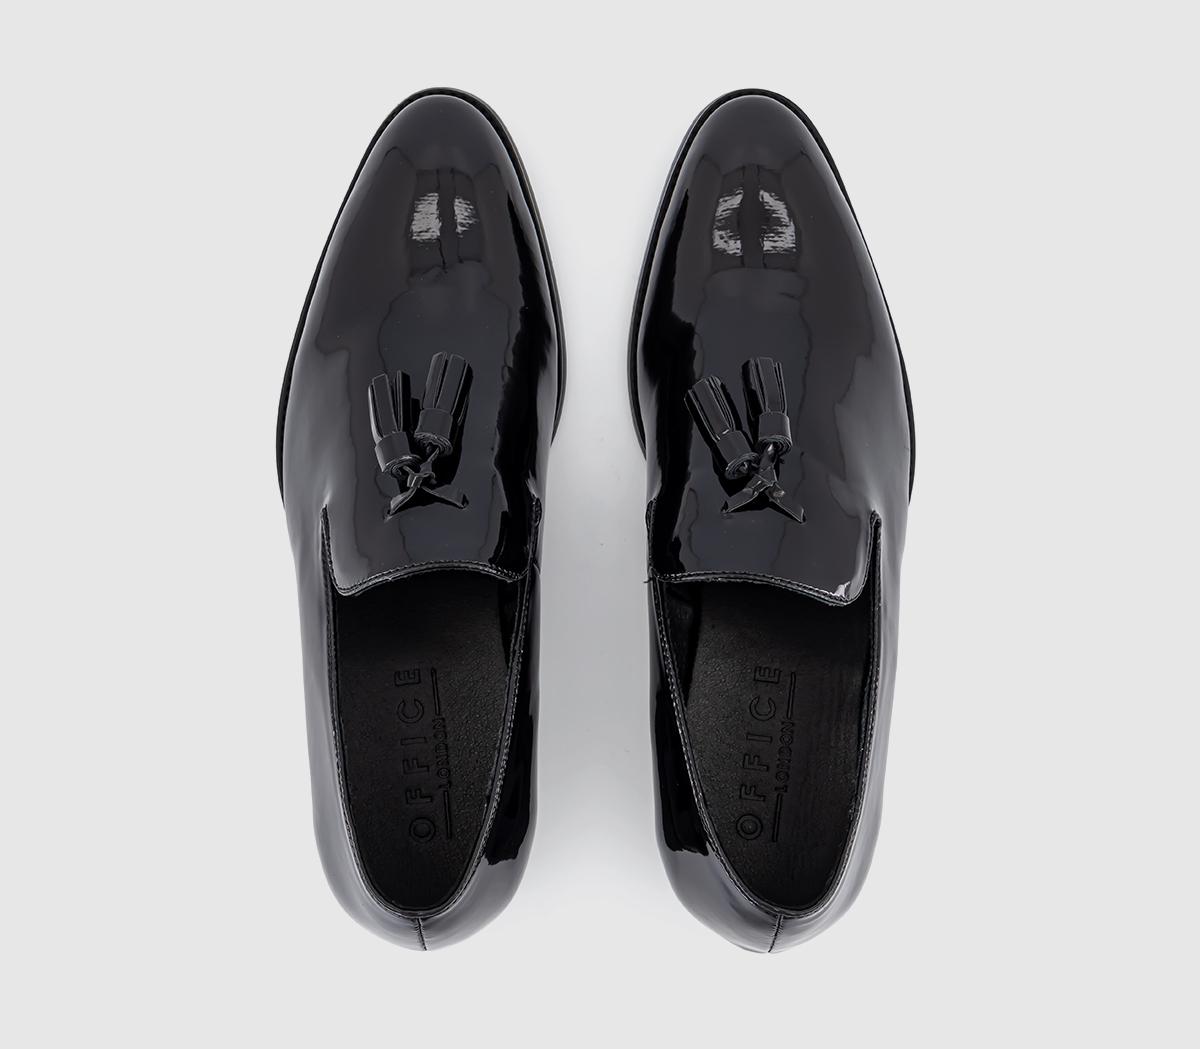 OFFICE Manuel Tassel Patent Loafers Black Patent - Men’s Smart Shoes